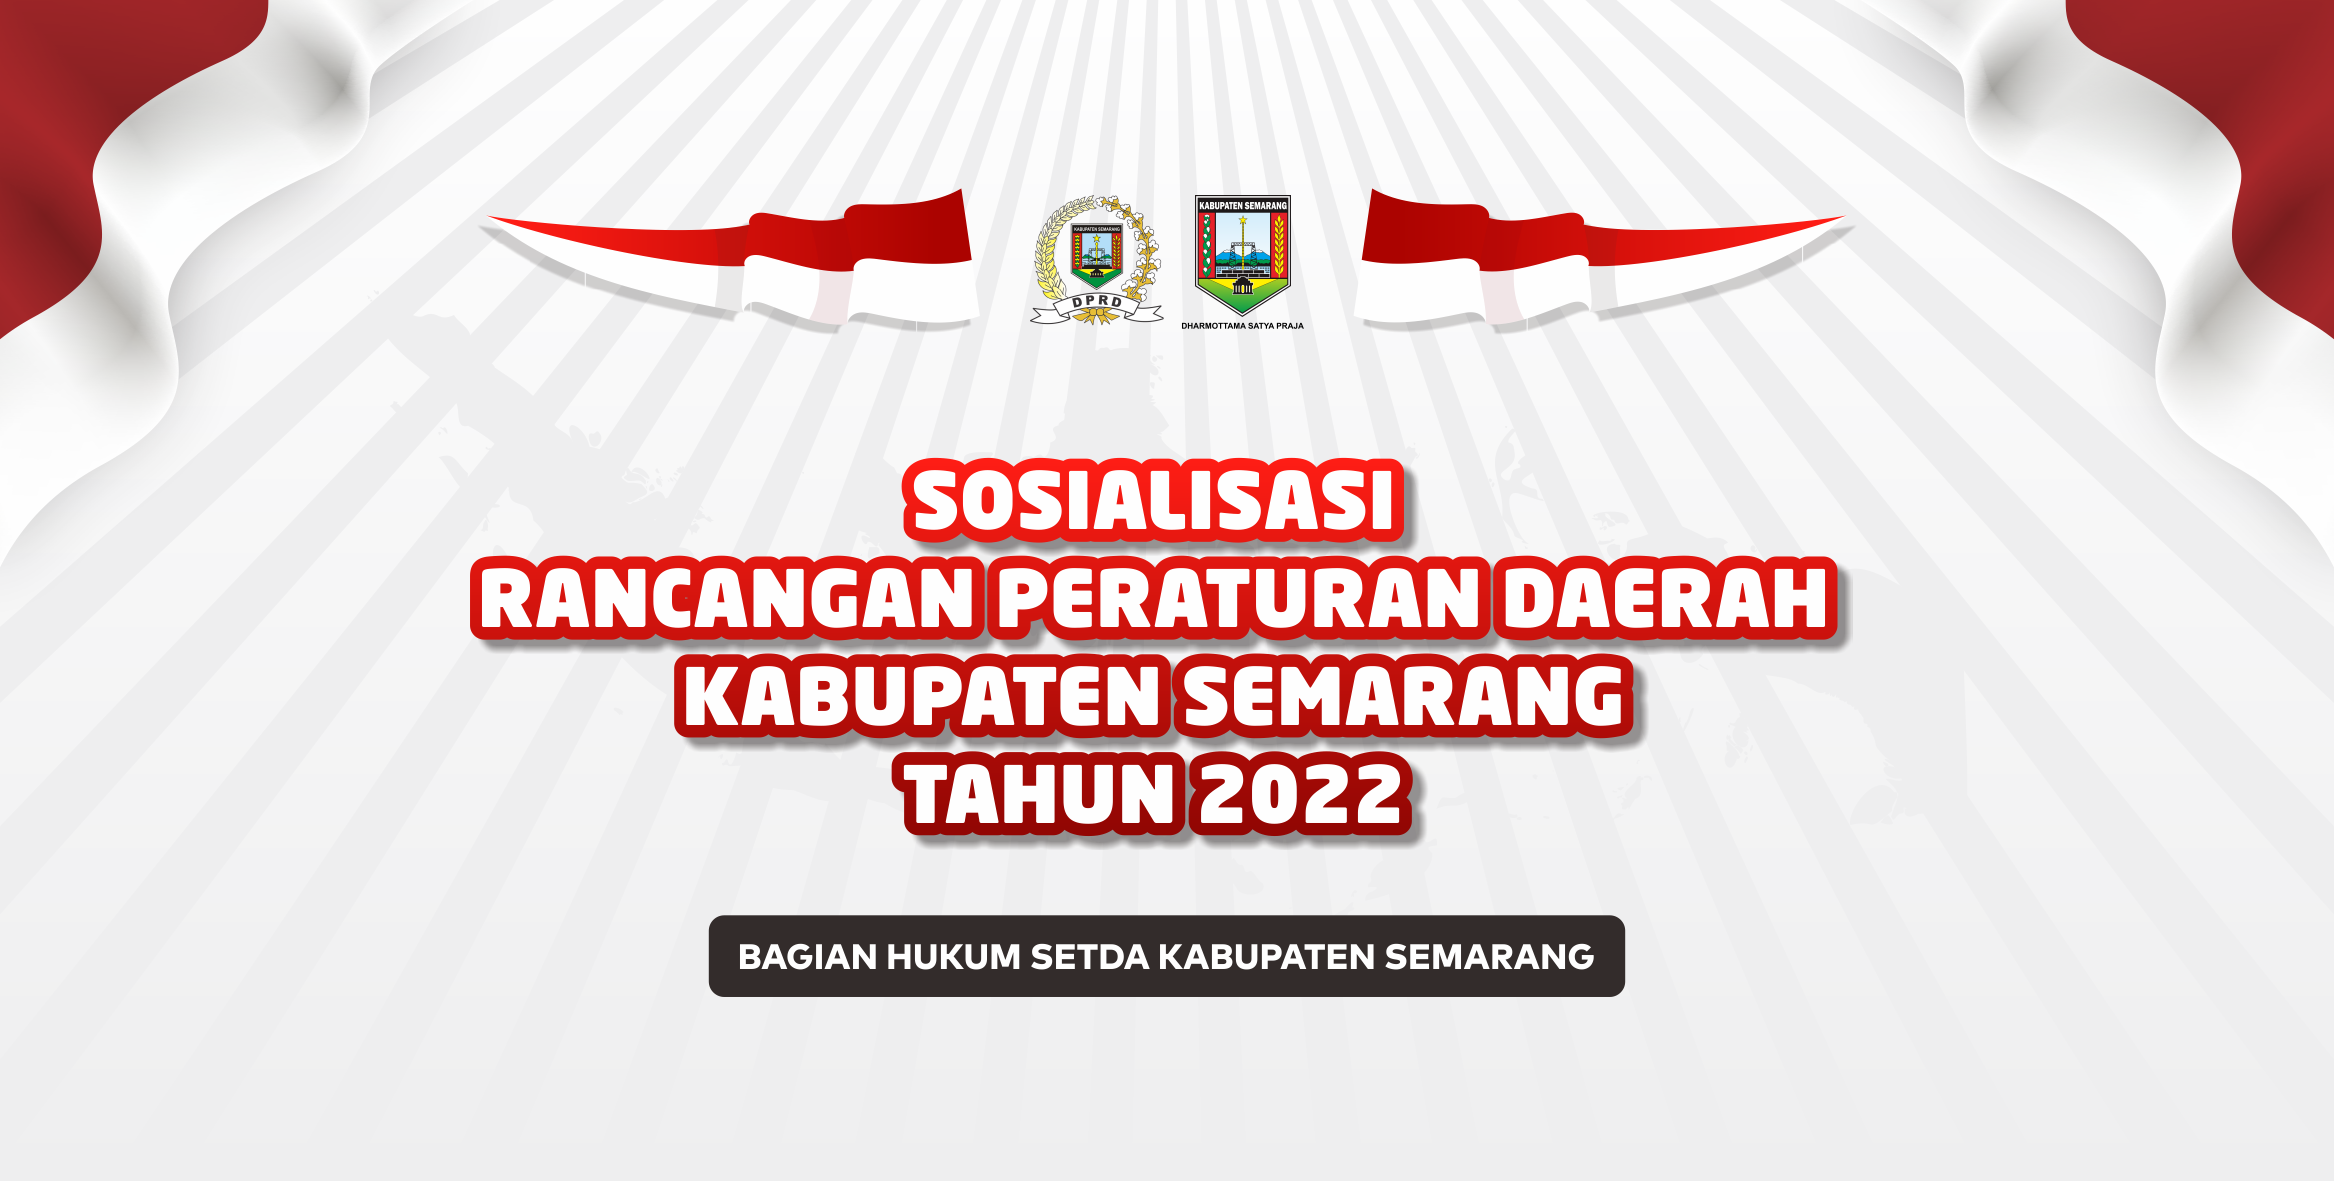 Sosialisasi Raperda Kabupaten Semarang Tahun 2022 Di Kecamatan Ungaran Timur, Ungaran Barat Dan Pringapus